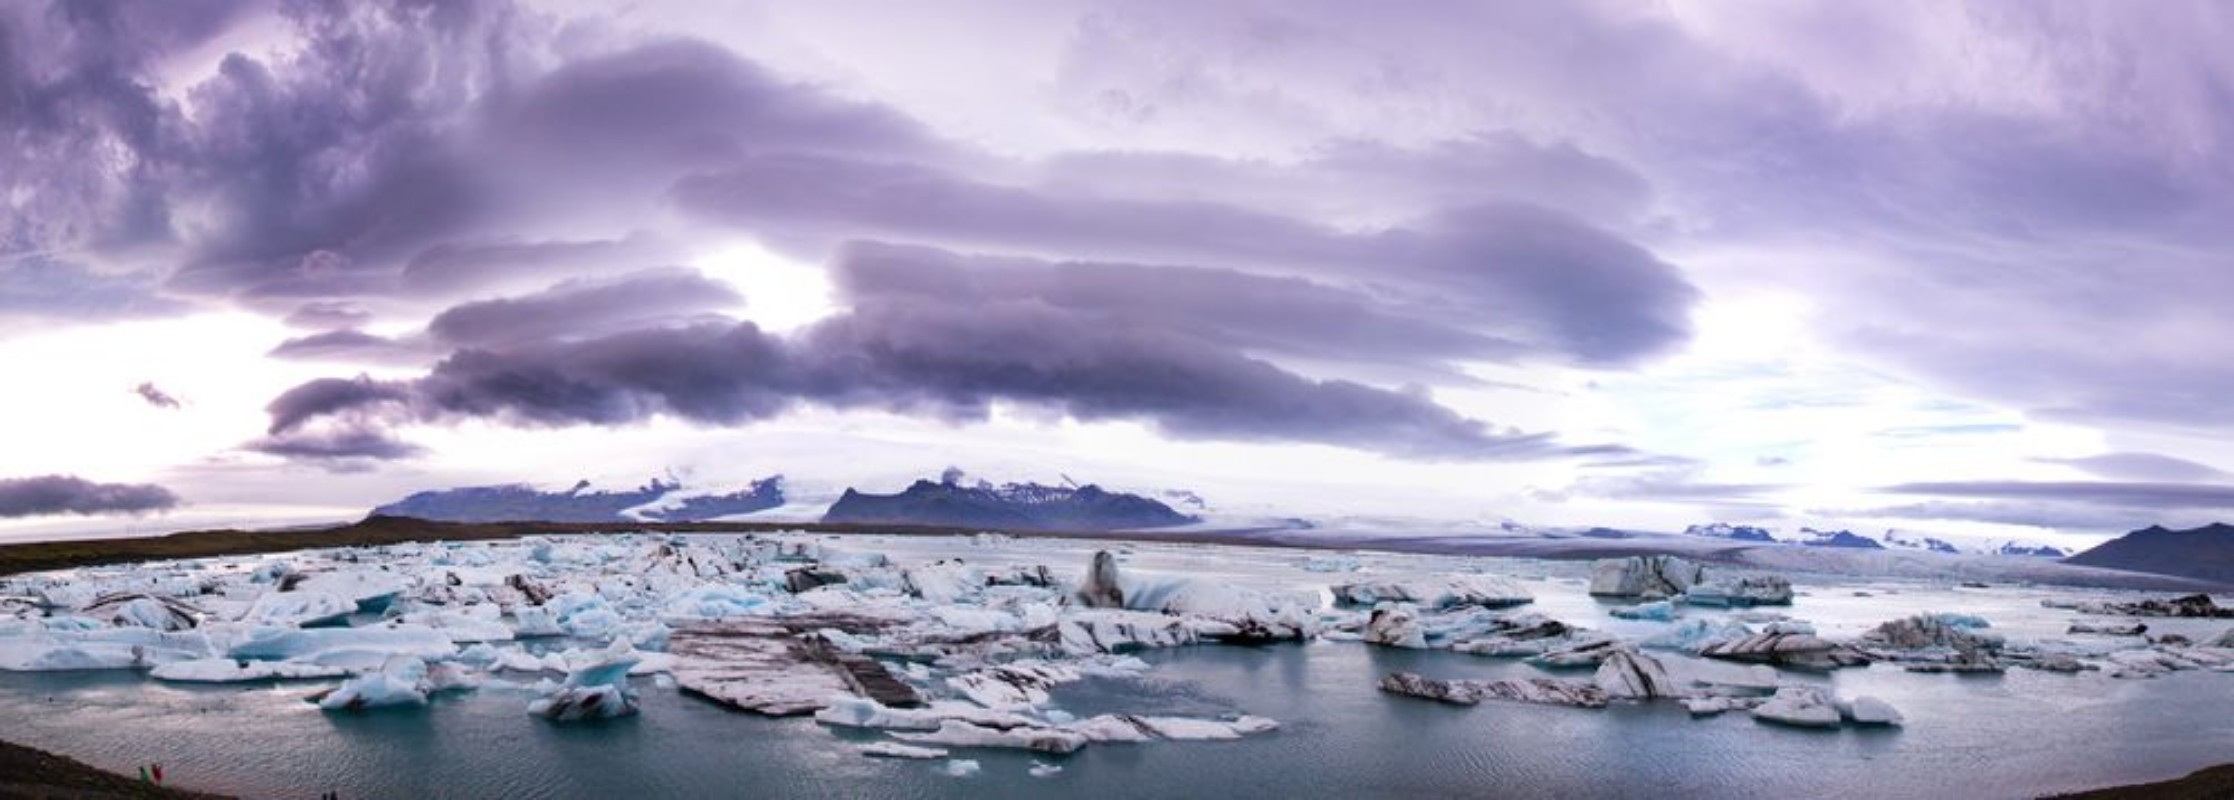 Bild på Jkulsarlohn - Gletschersee Island  Icelad